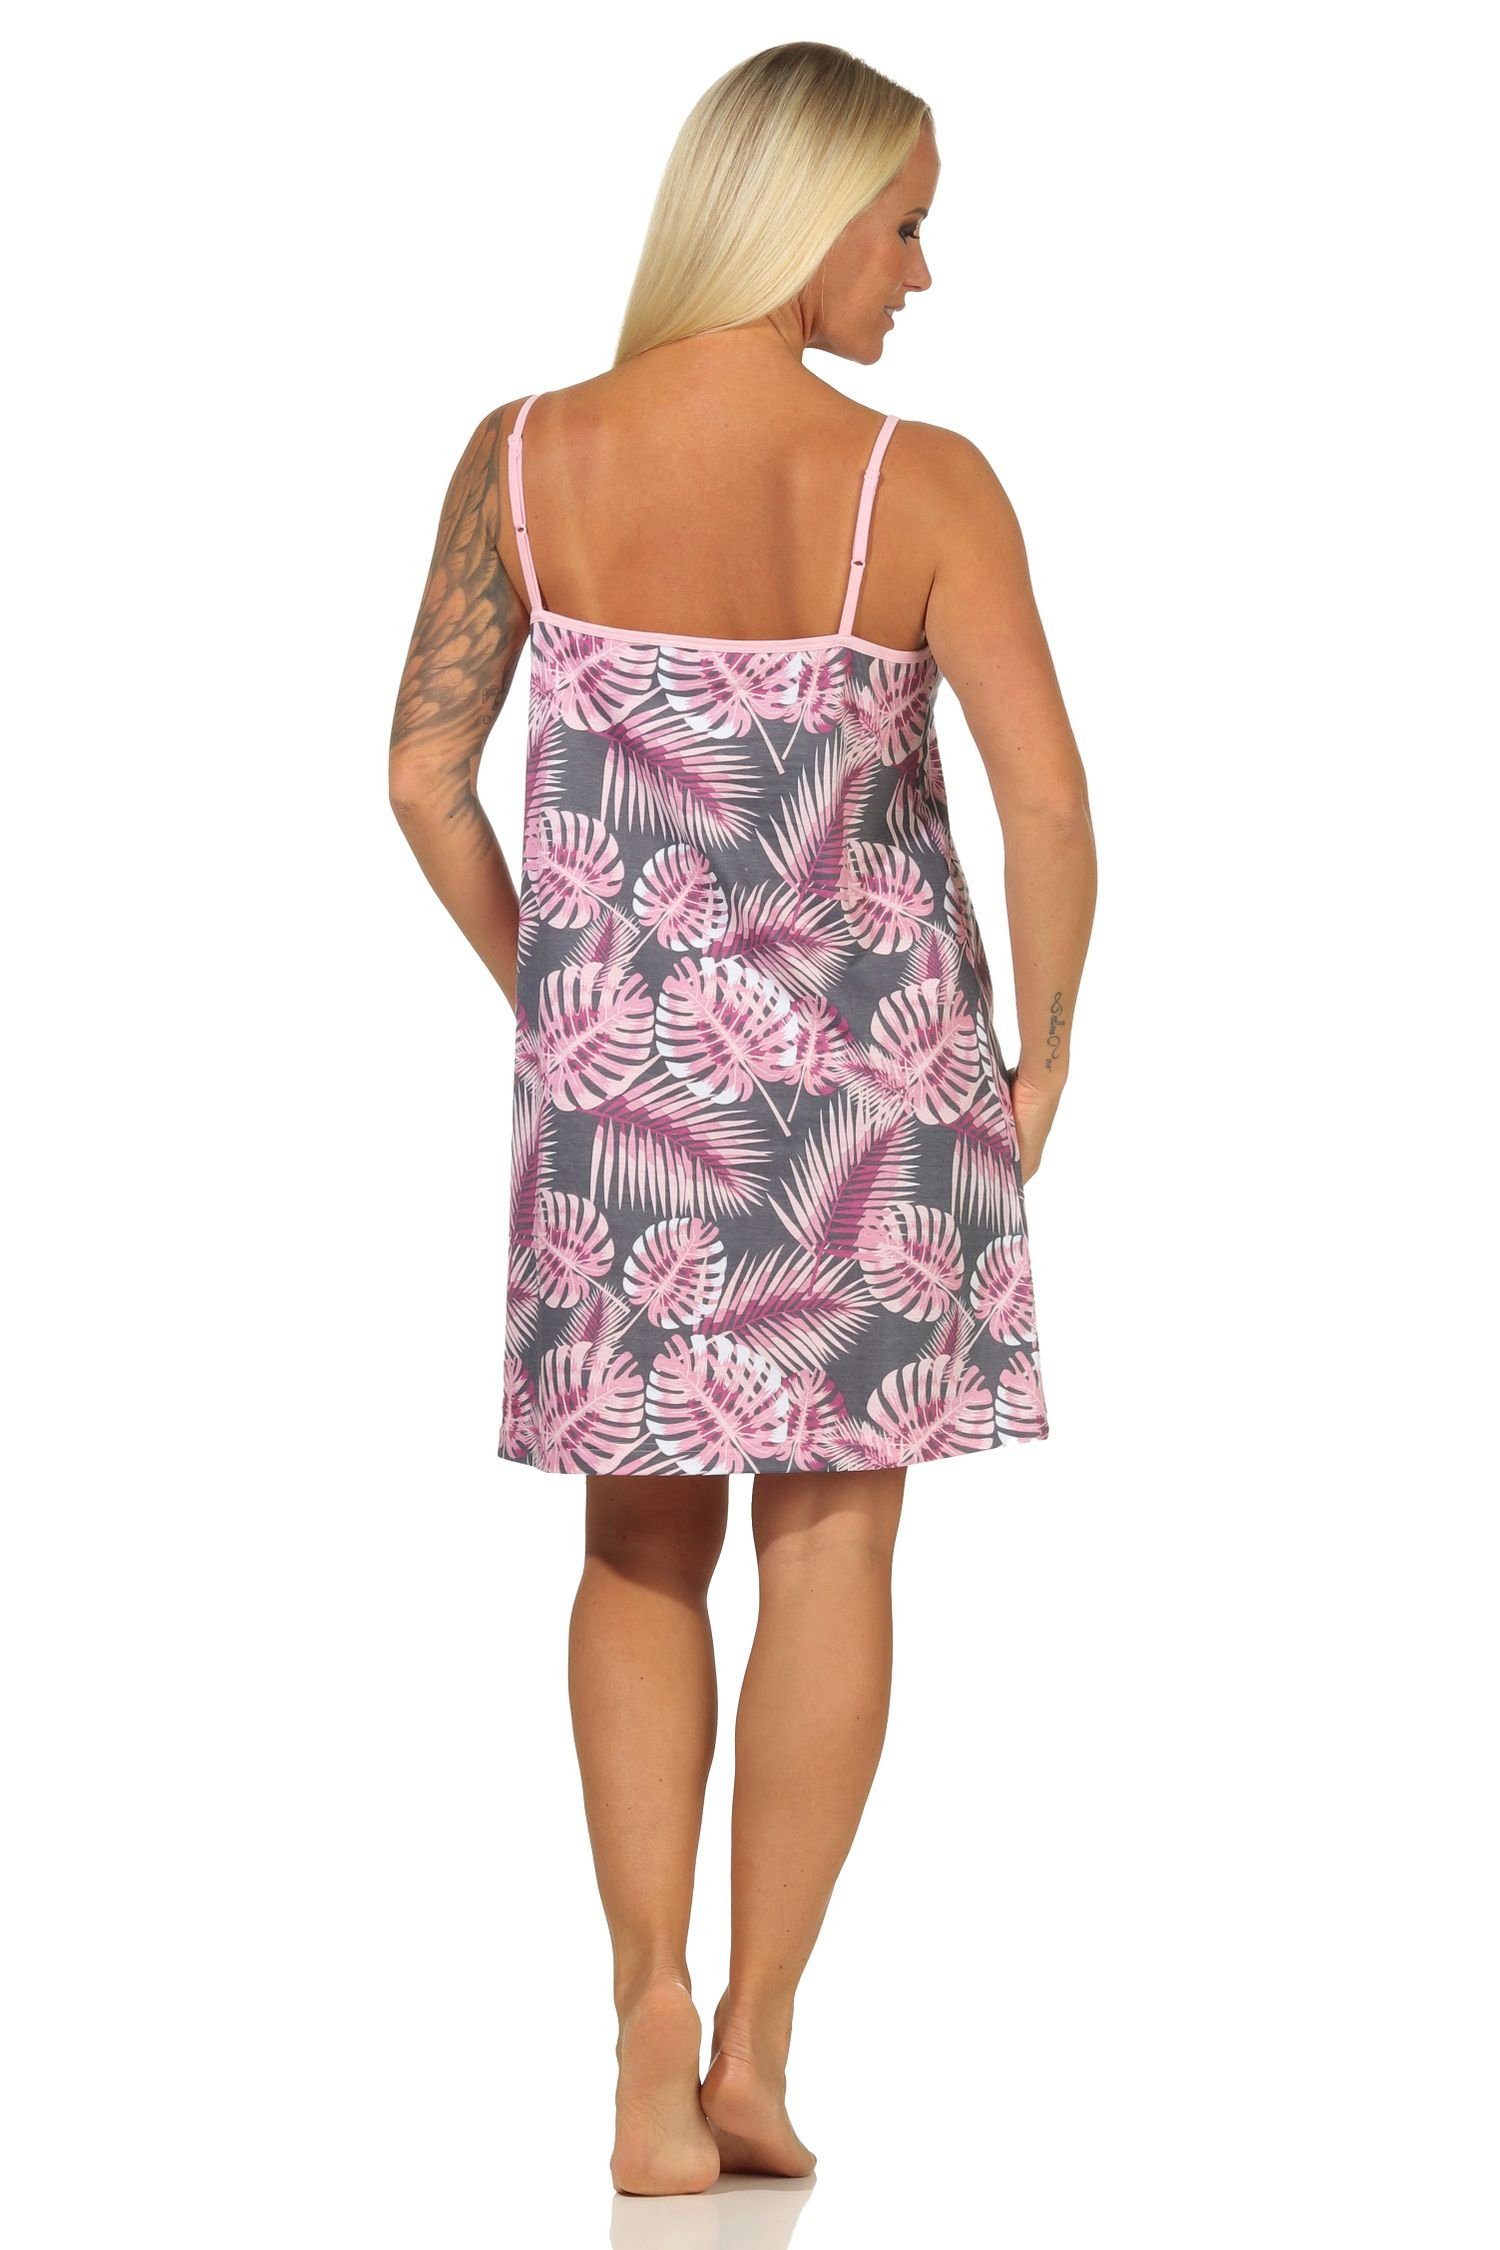 Ärmelloses rosa Spaghetti in Print Nachthemd Normann Nachthemd Damen floralem